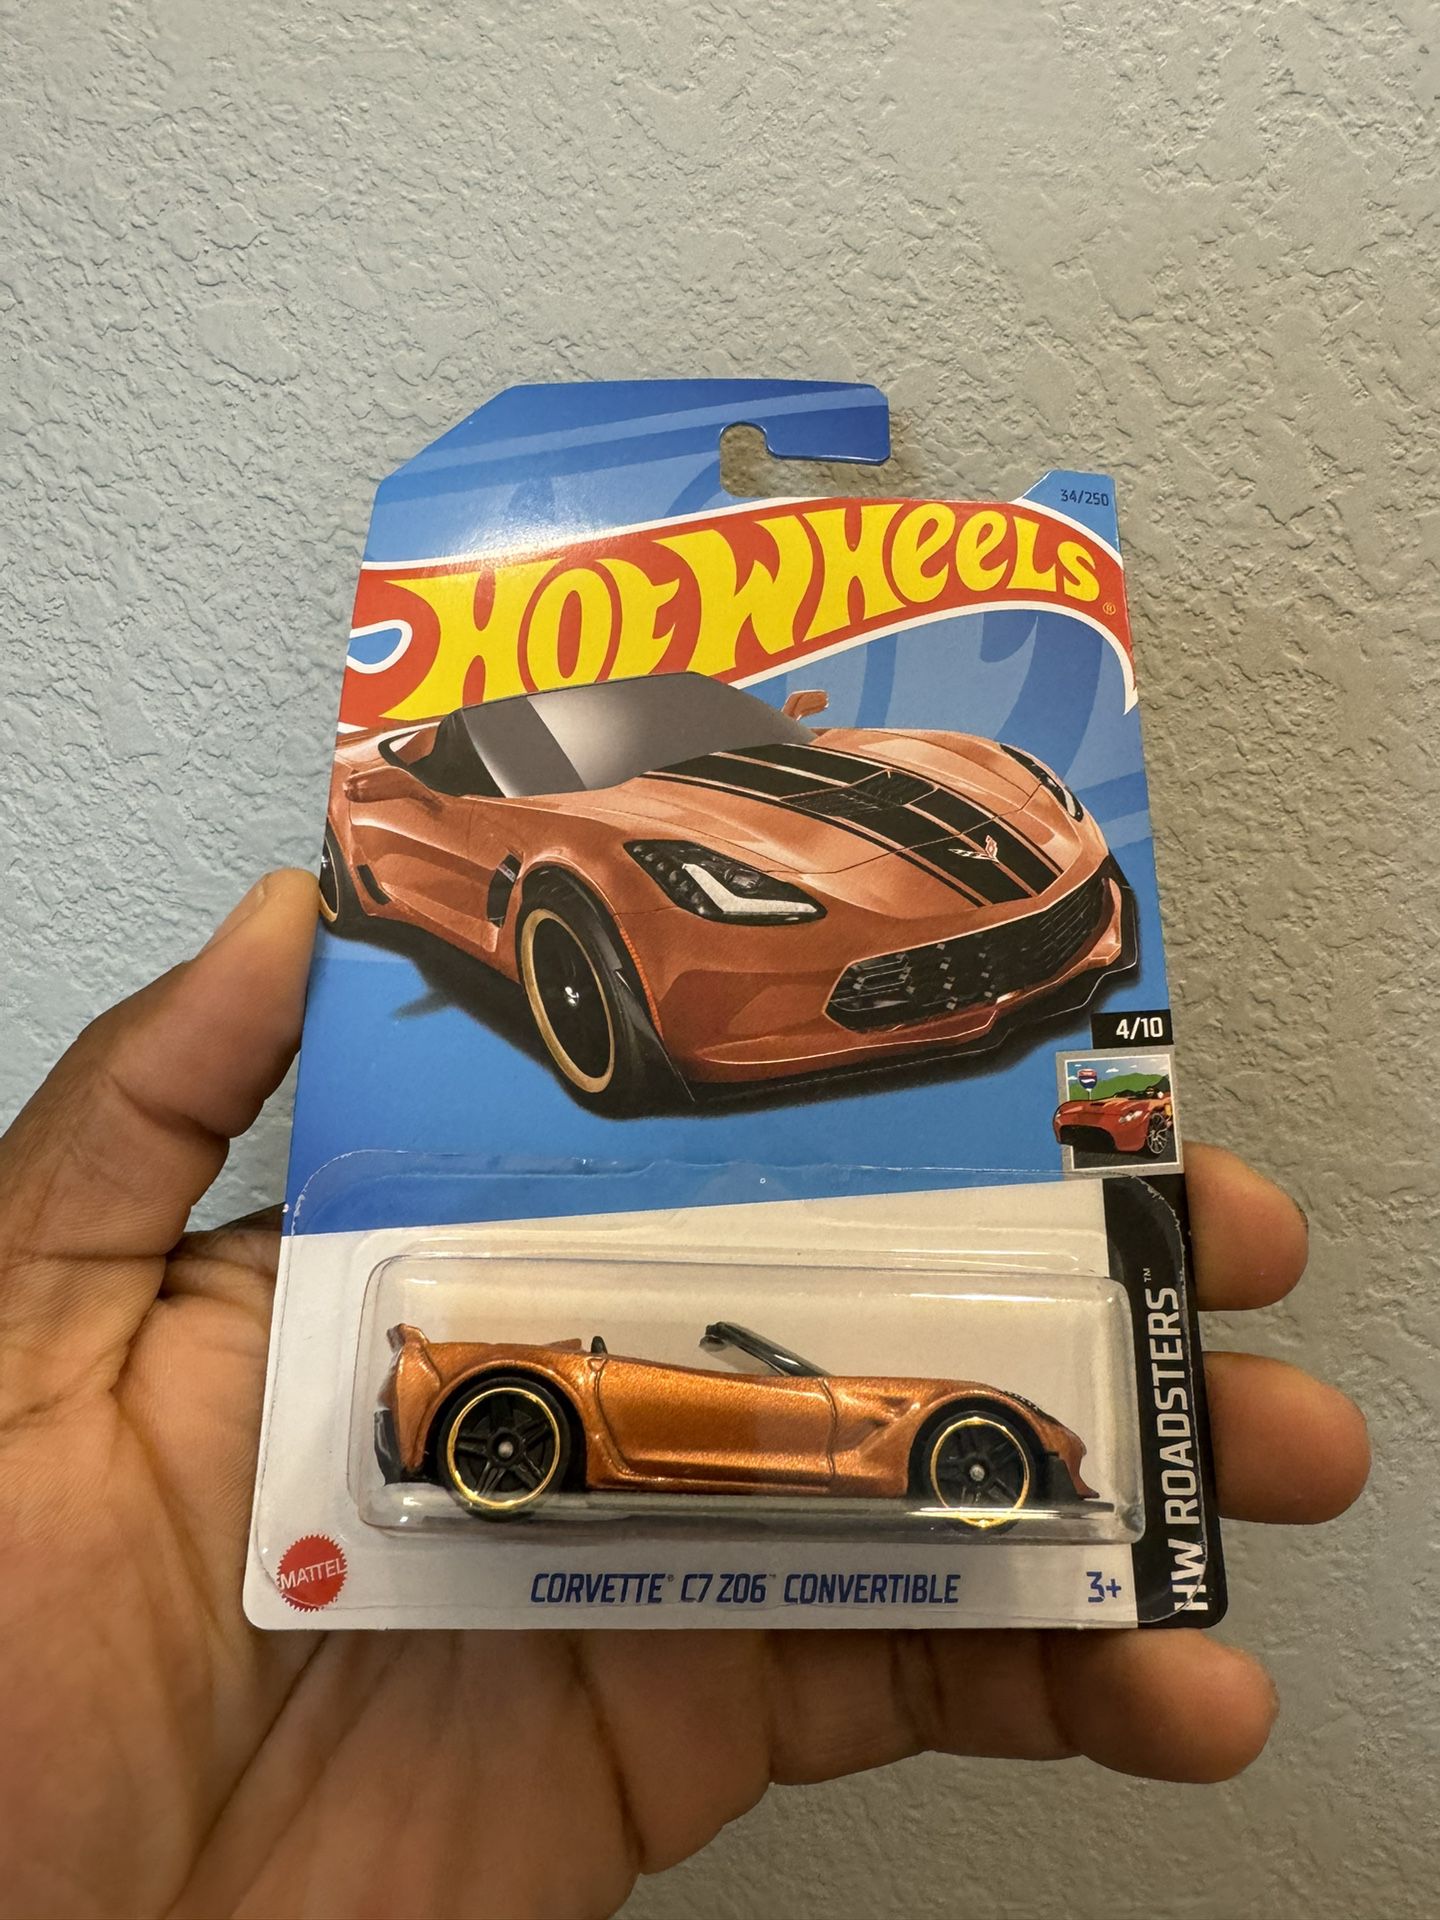 Corvette Hotwheel